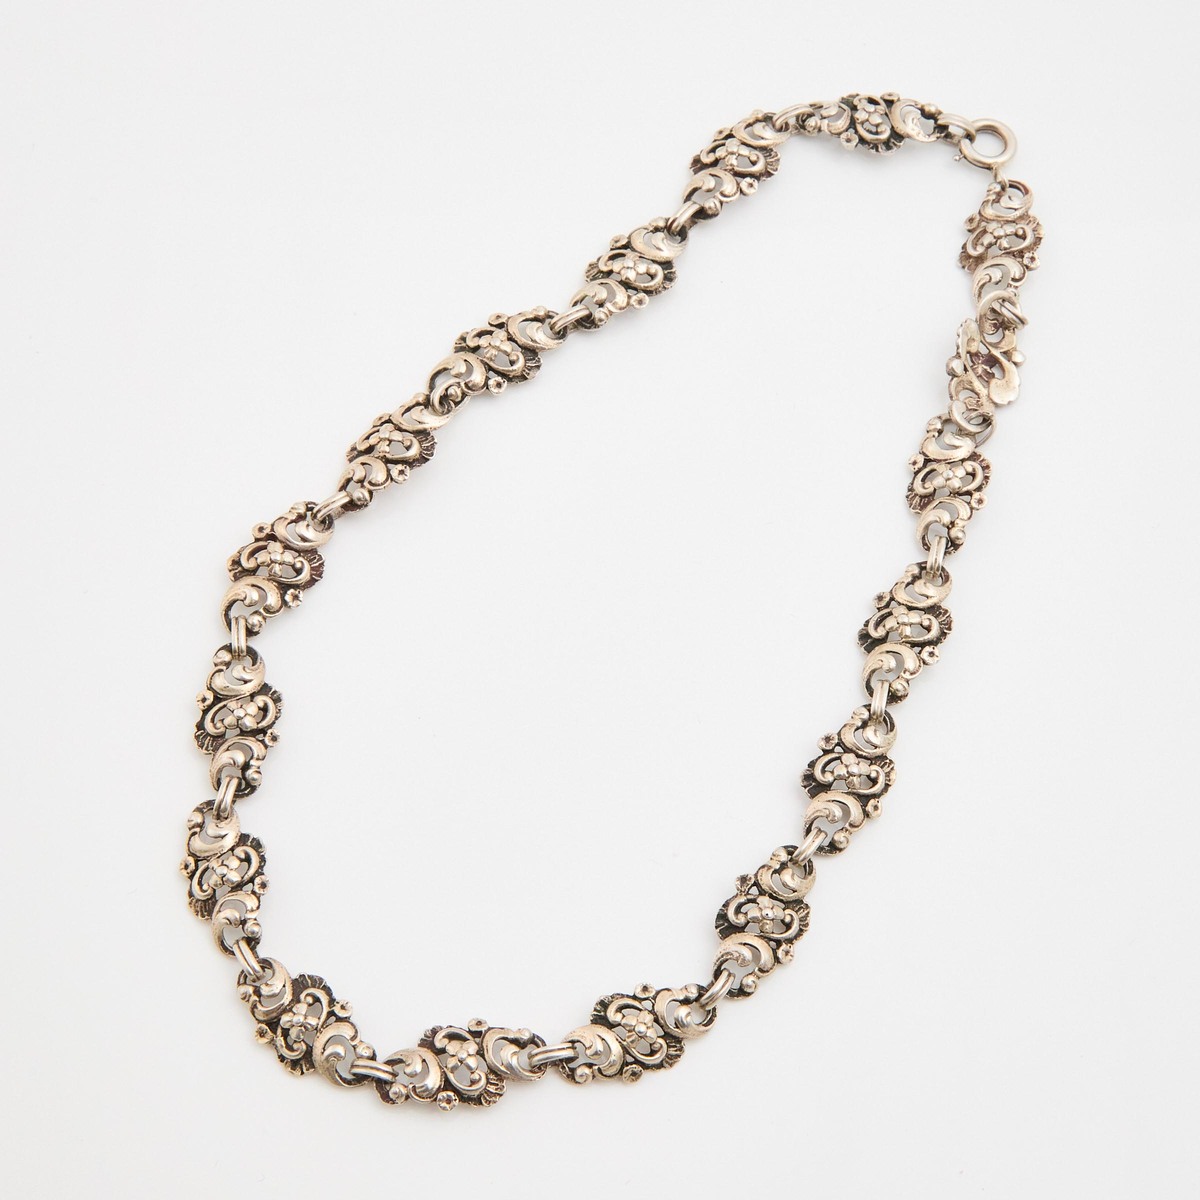 Austrian 835 Grade Silver Necklace, w. 0.5"